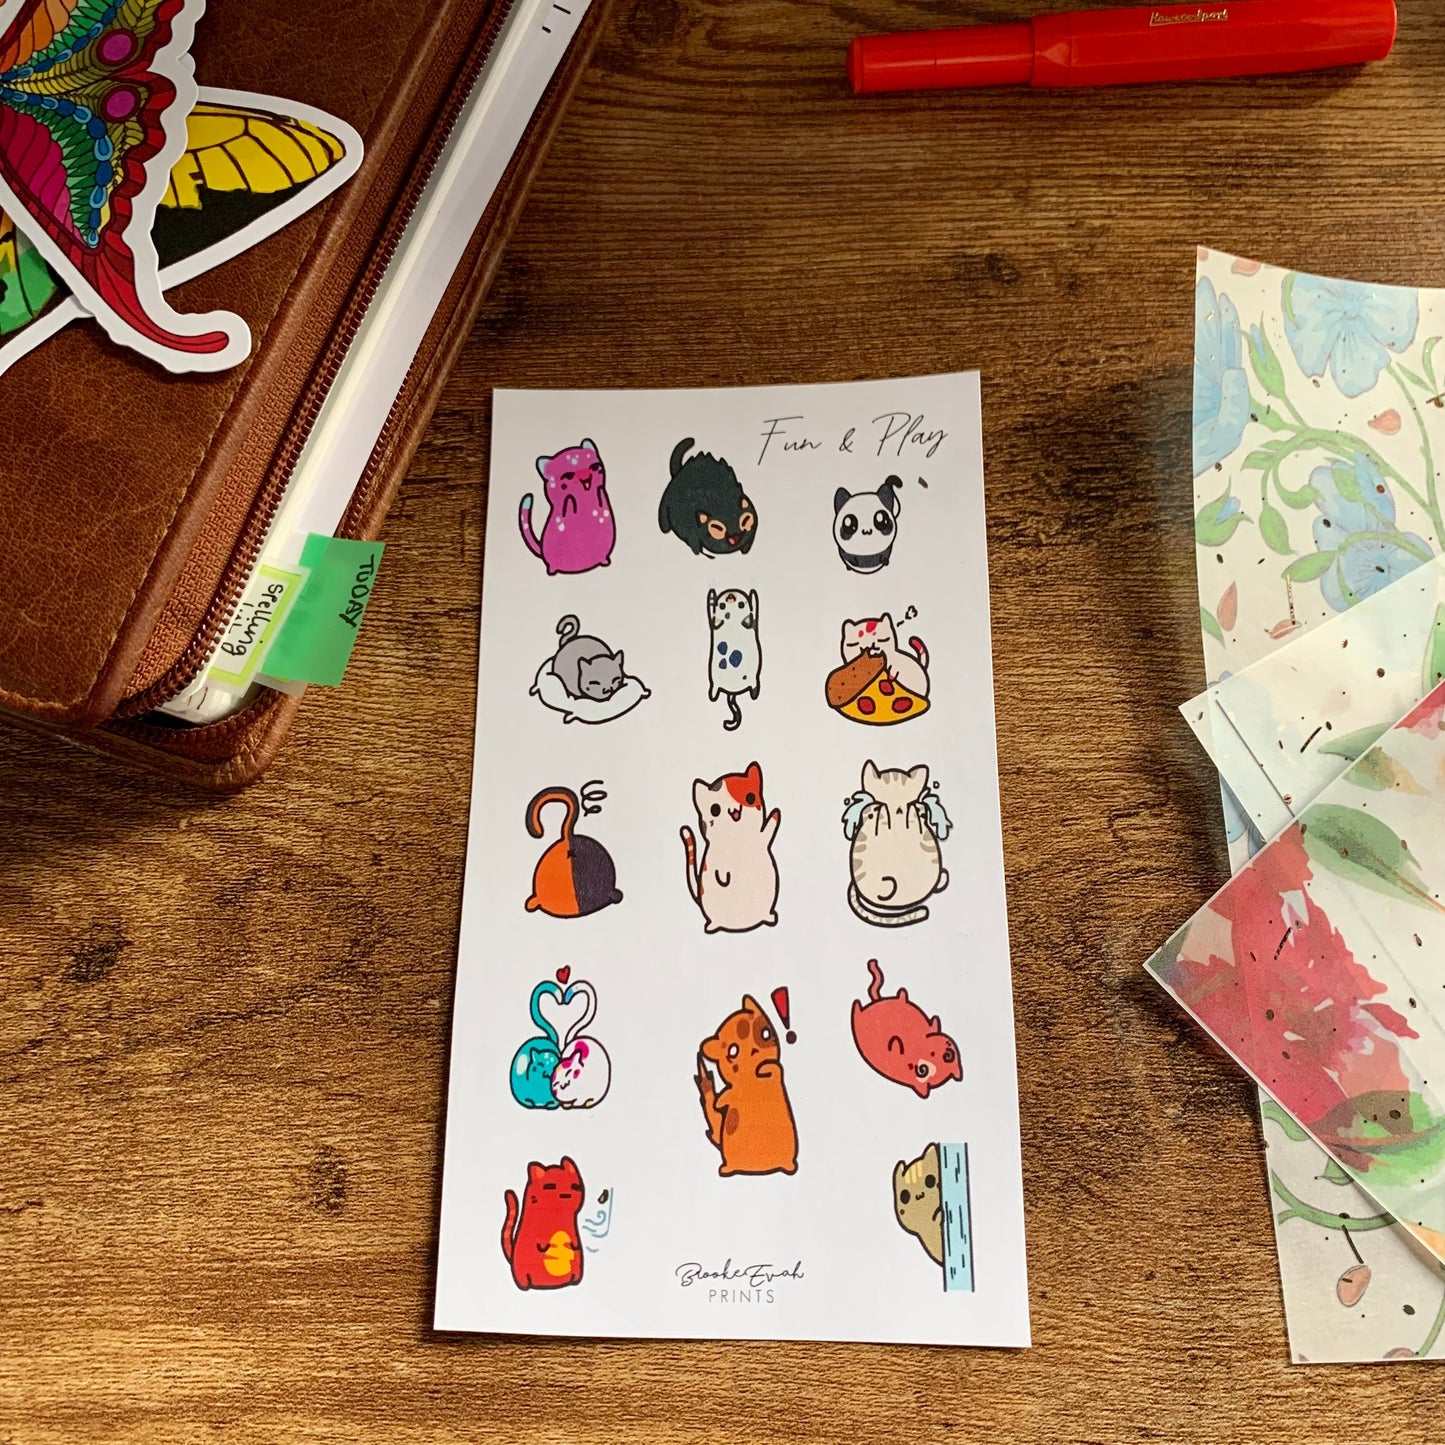 Cute Hand drawn Cat Stickers - Fun & Play